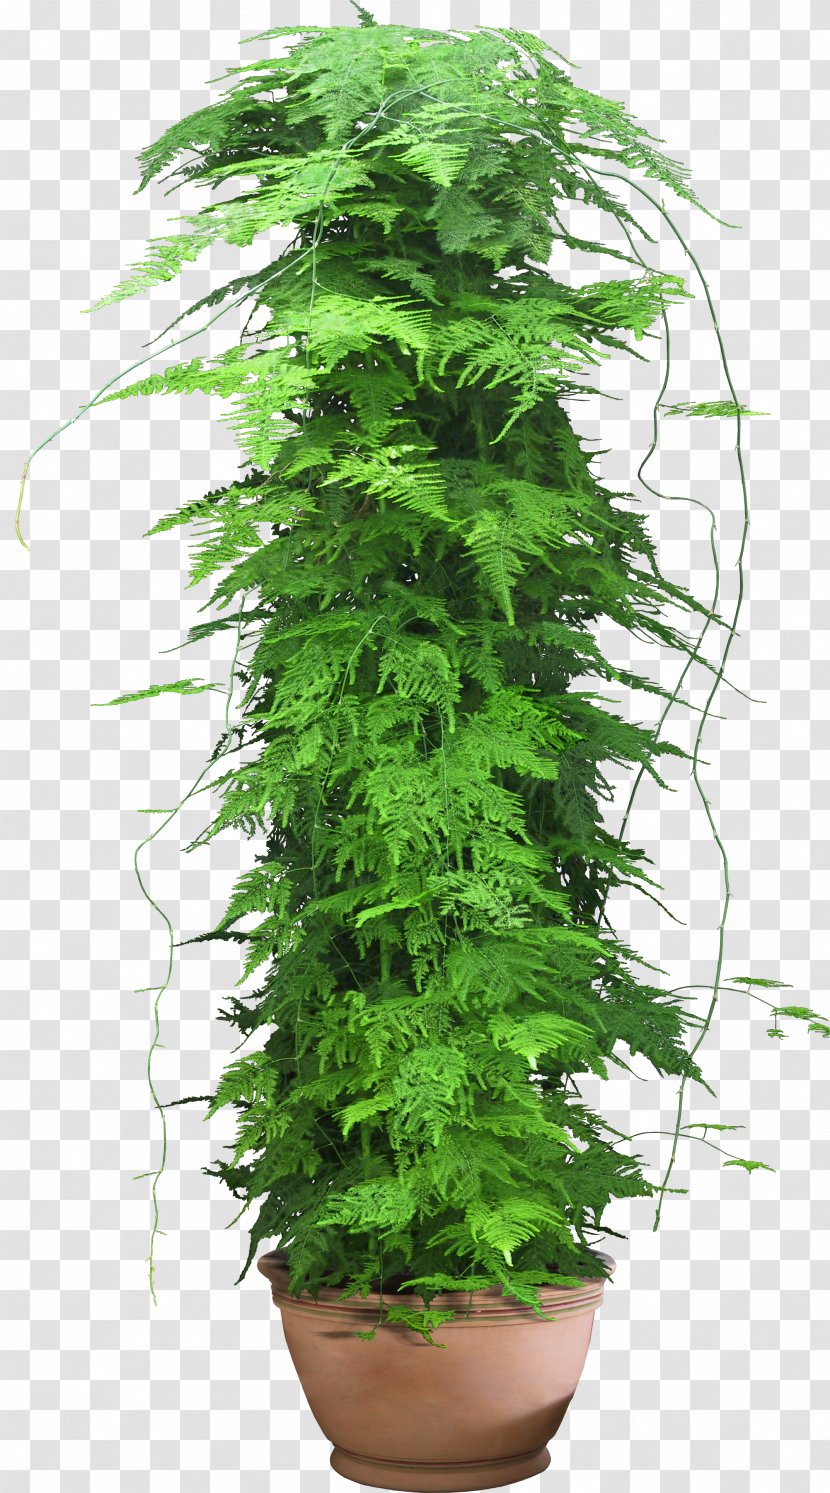 Web Template Plant - Grass - Flower Pot Transparent PNG